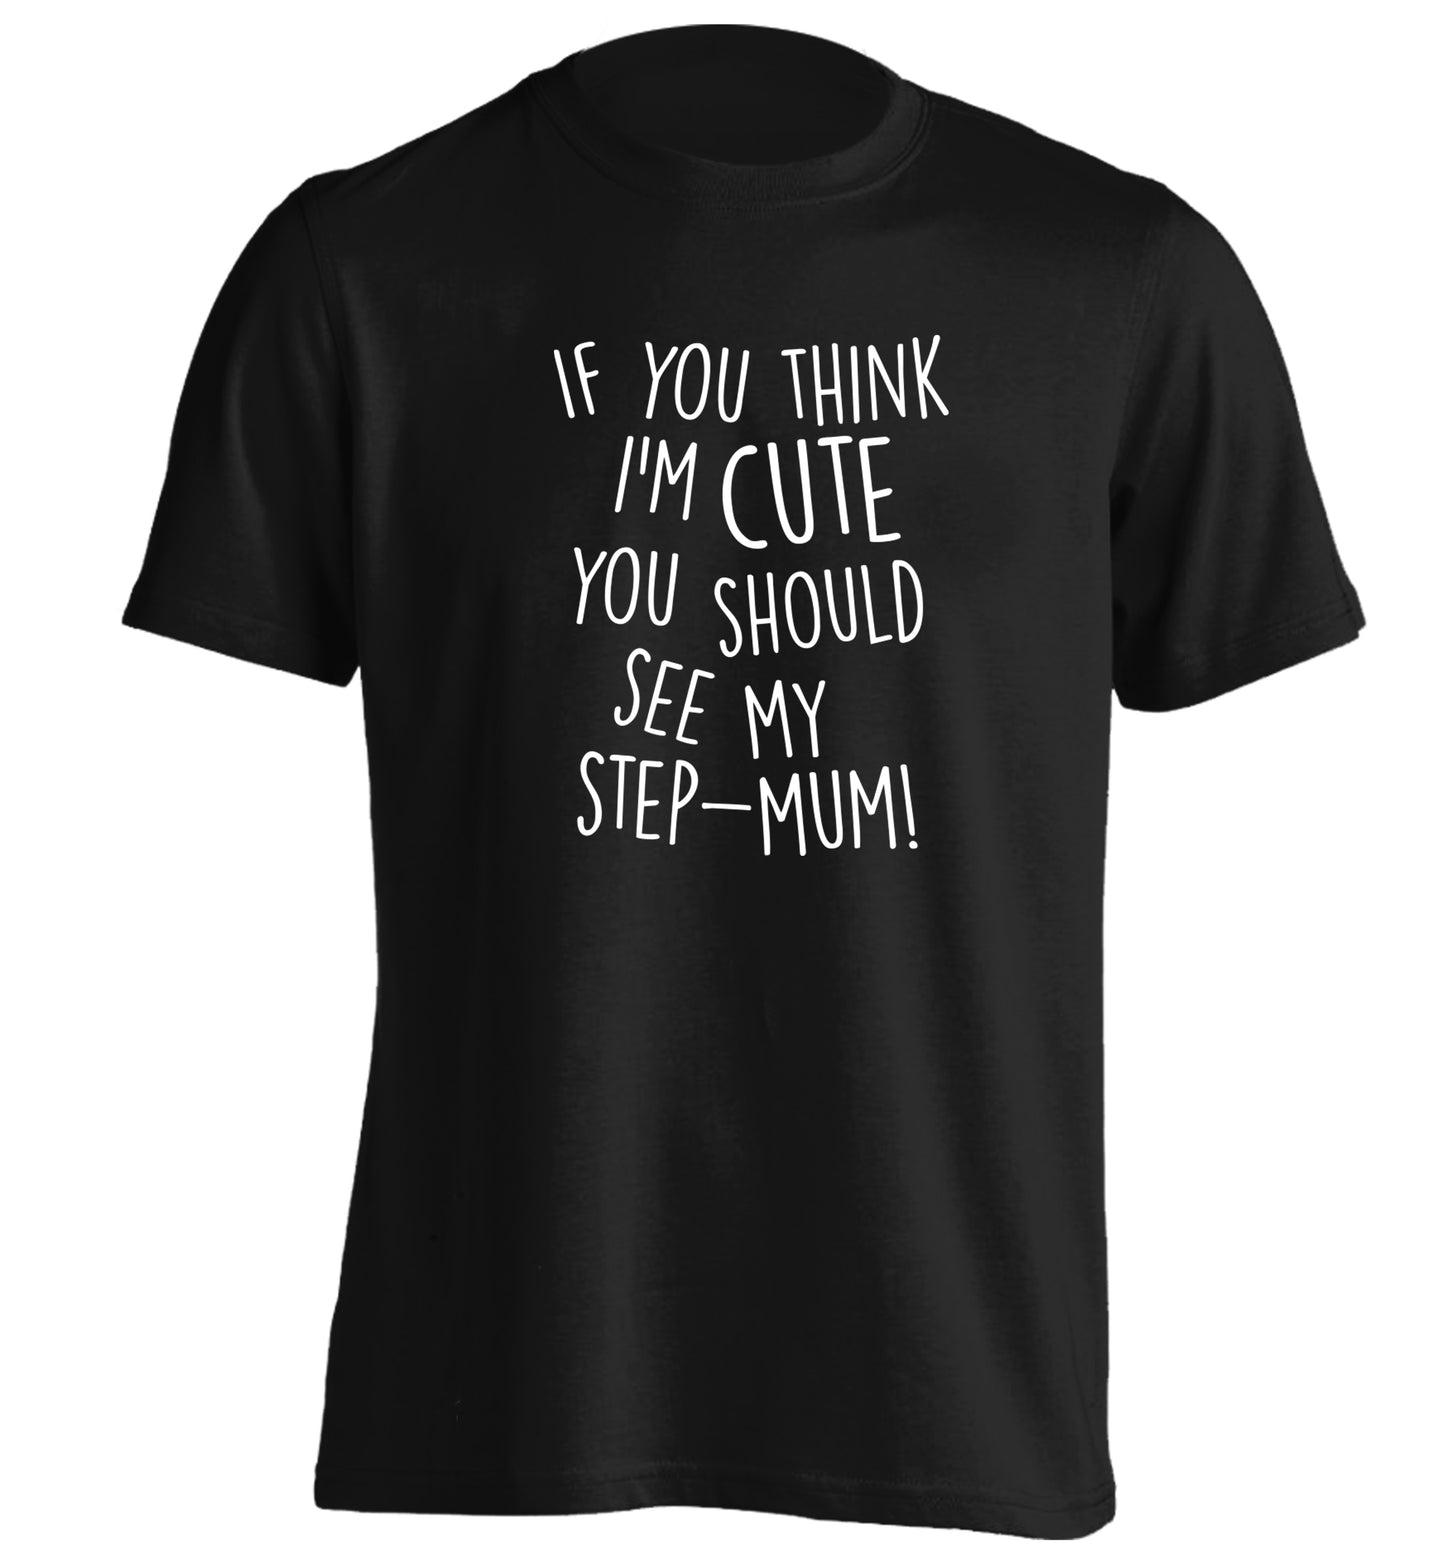 If you think I'm cute you should see my step-mum adults unisex black Tshirt 2XL